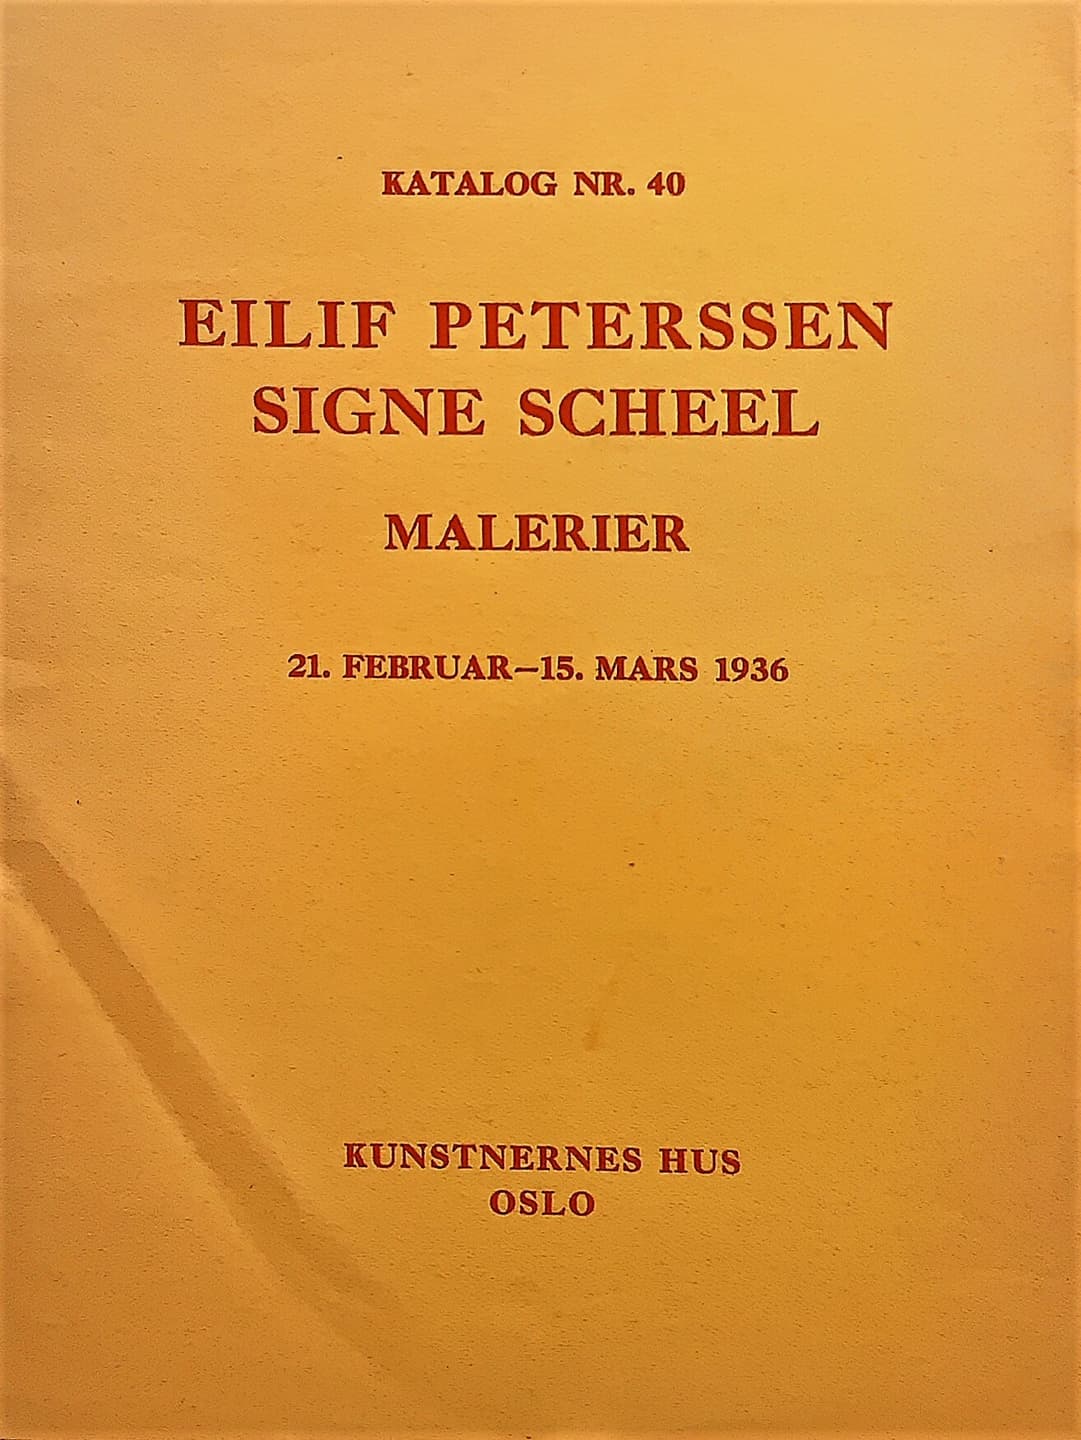 1936 Eilif Peterssen og Signe Sceel